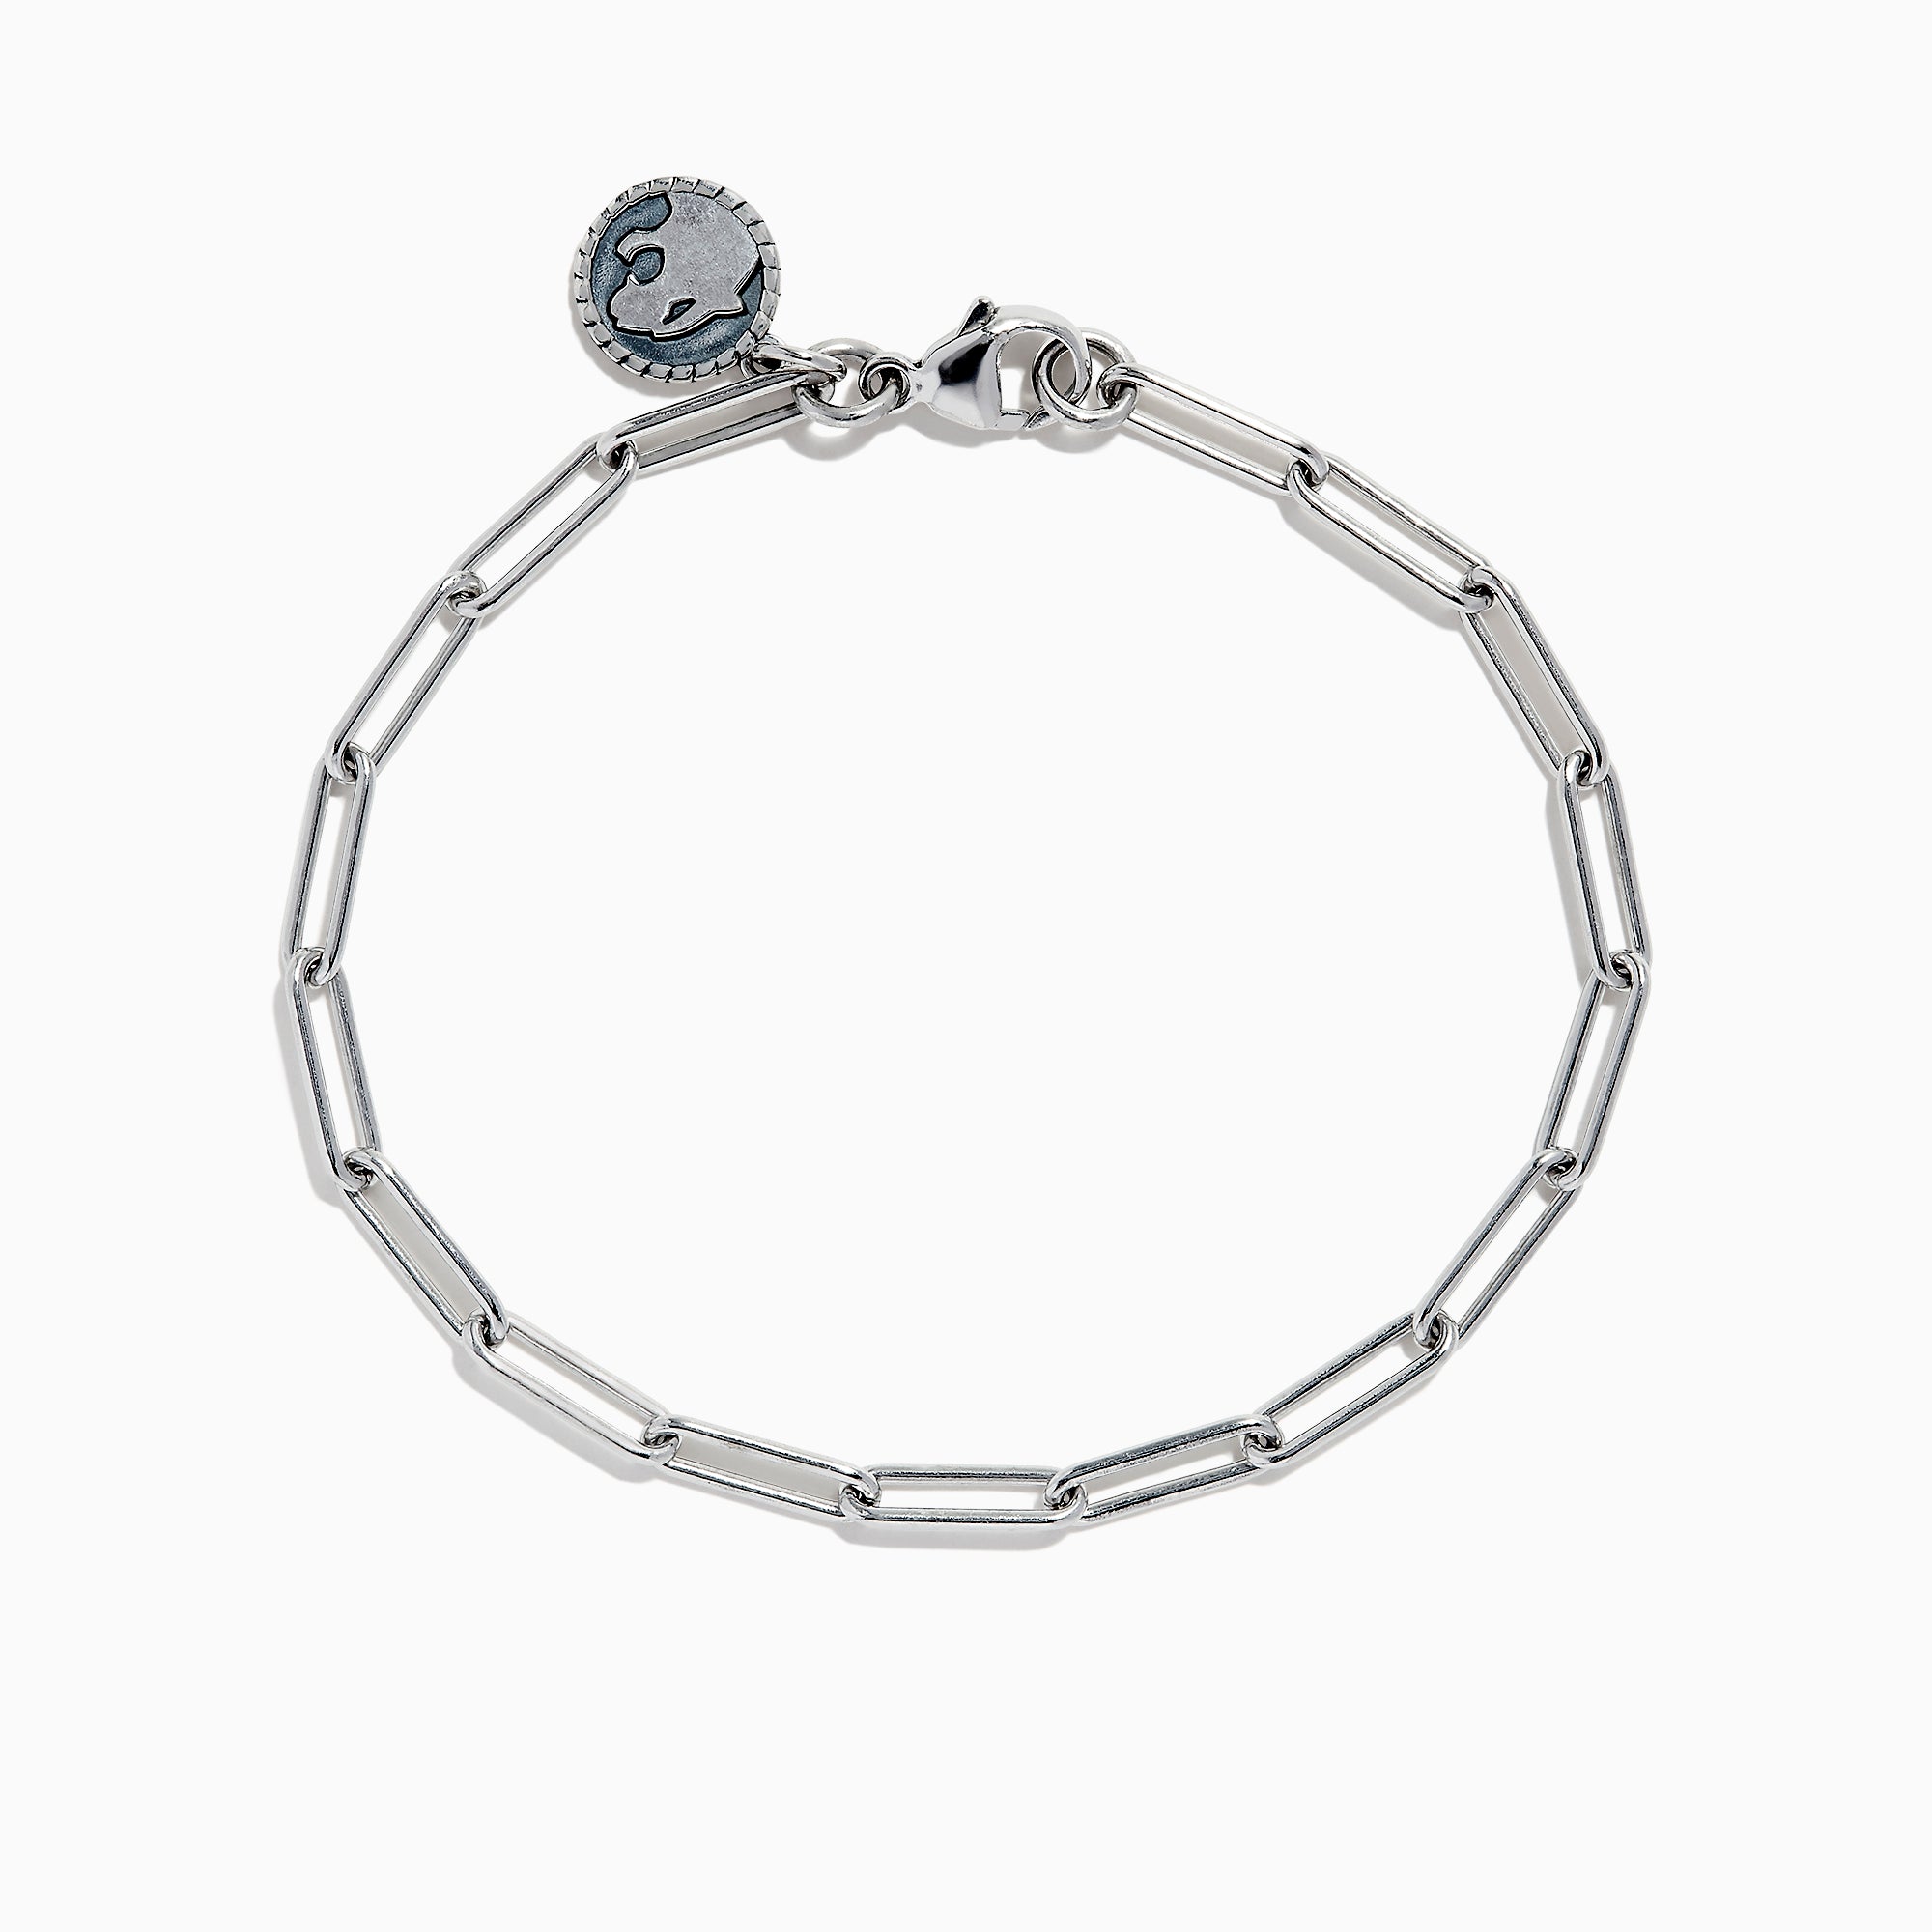 Effy 925 Sterling Silver Curb Chain Bracelet